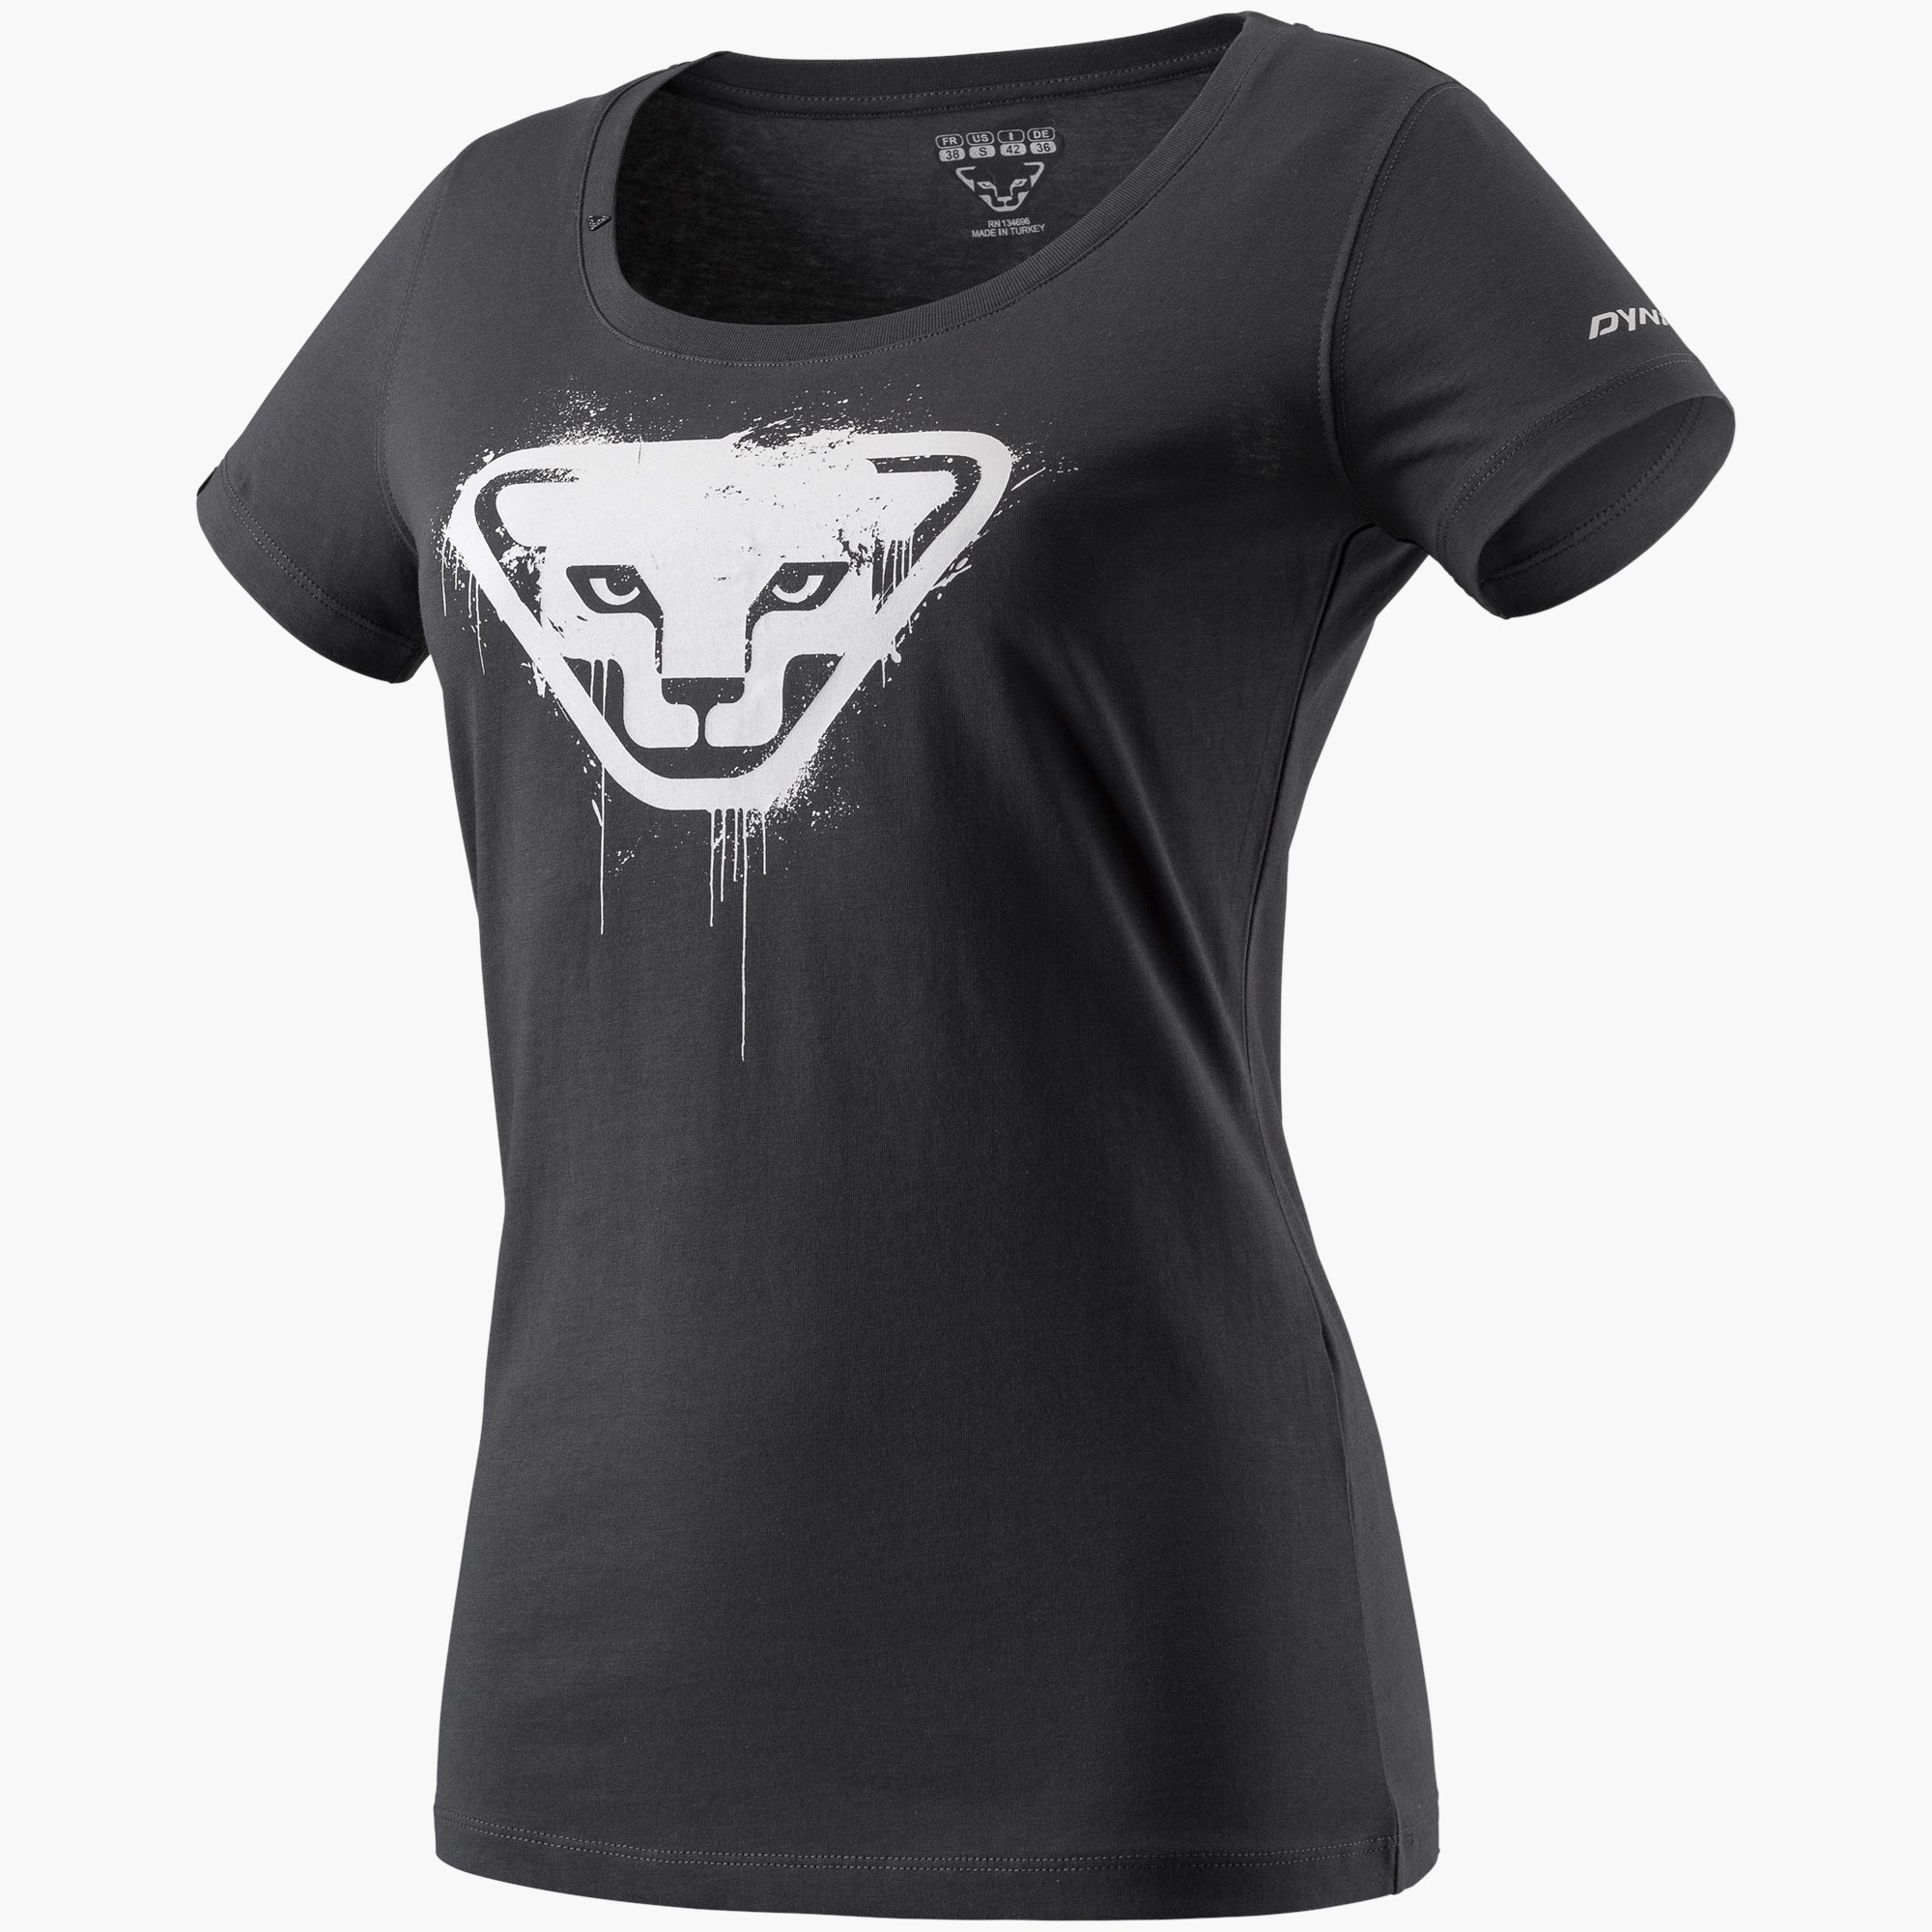 discount 72% Gray/Silver M WOMEN FASHION Shirts & T-shirts T-shirt Basic Made in Italy T-shirt 